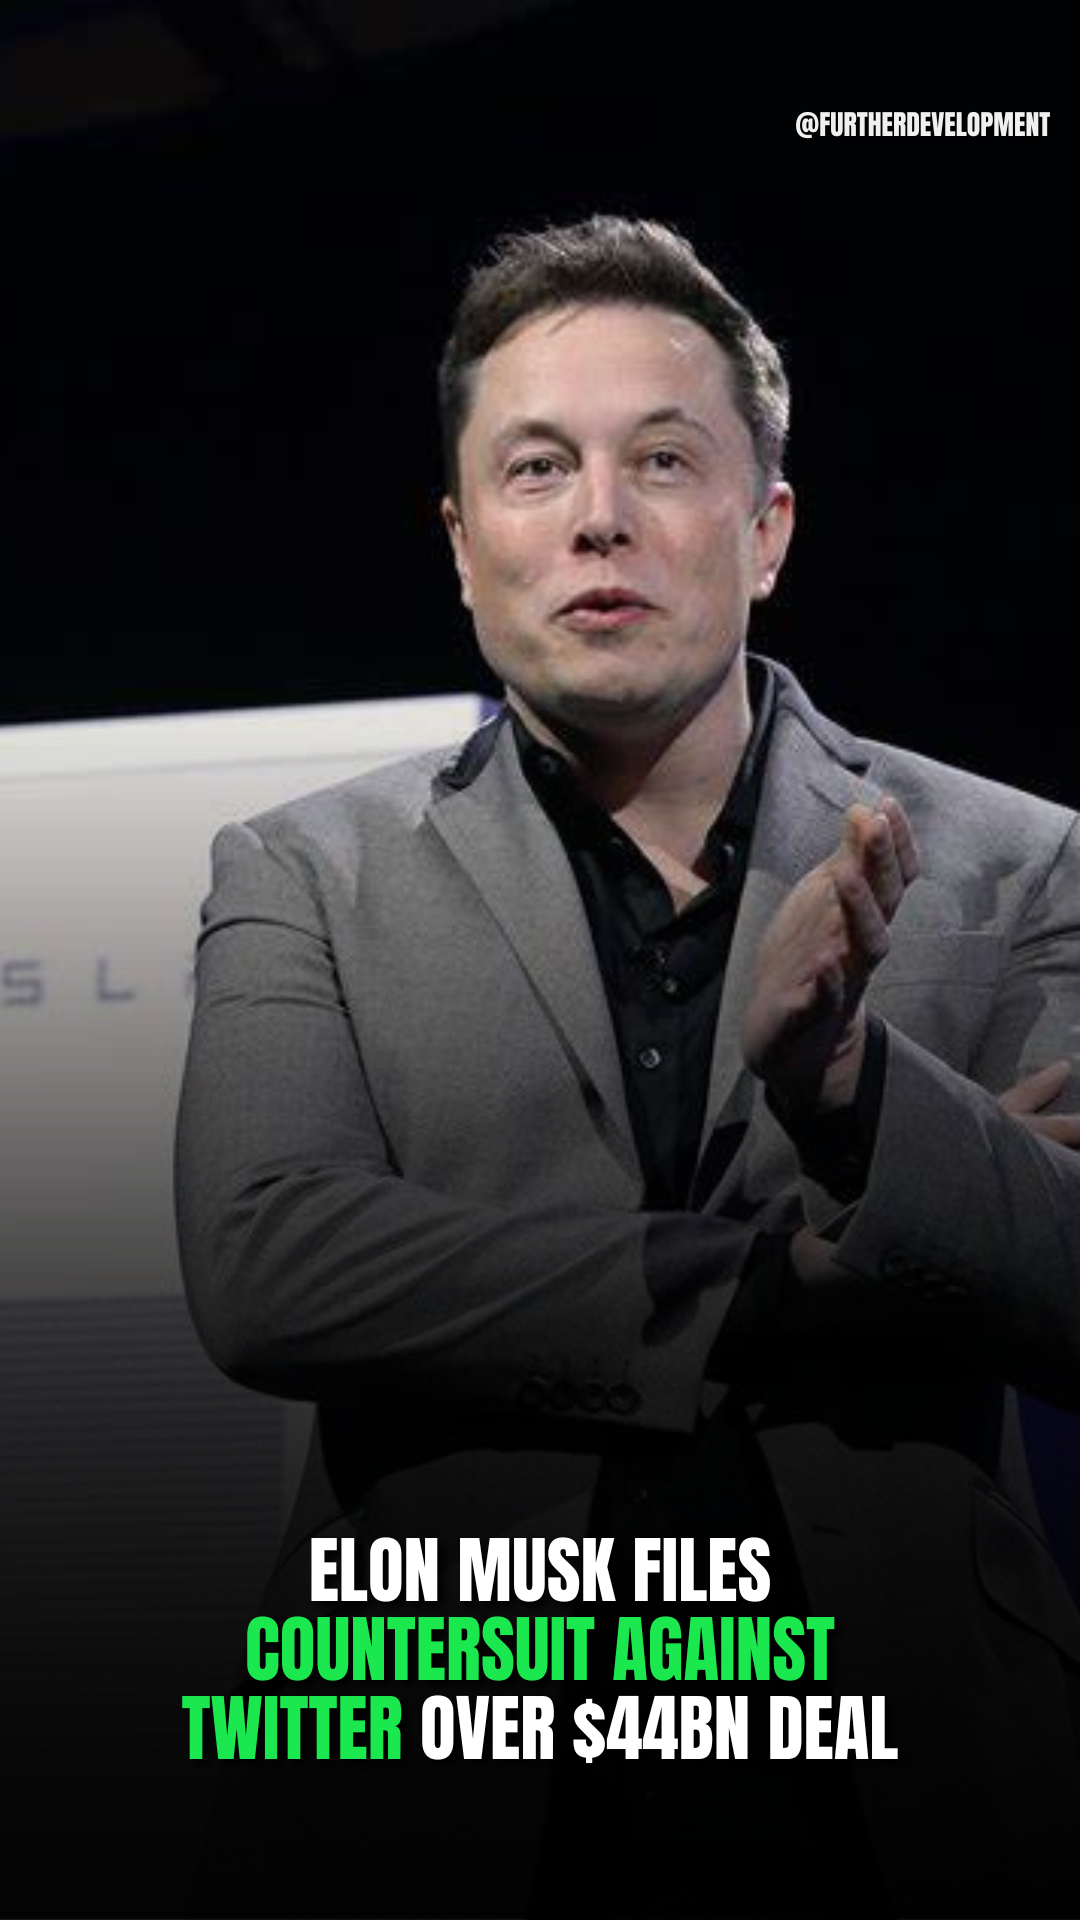 Elon Musk files countersuit against Twitter over $44bn deal